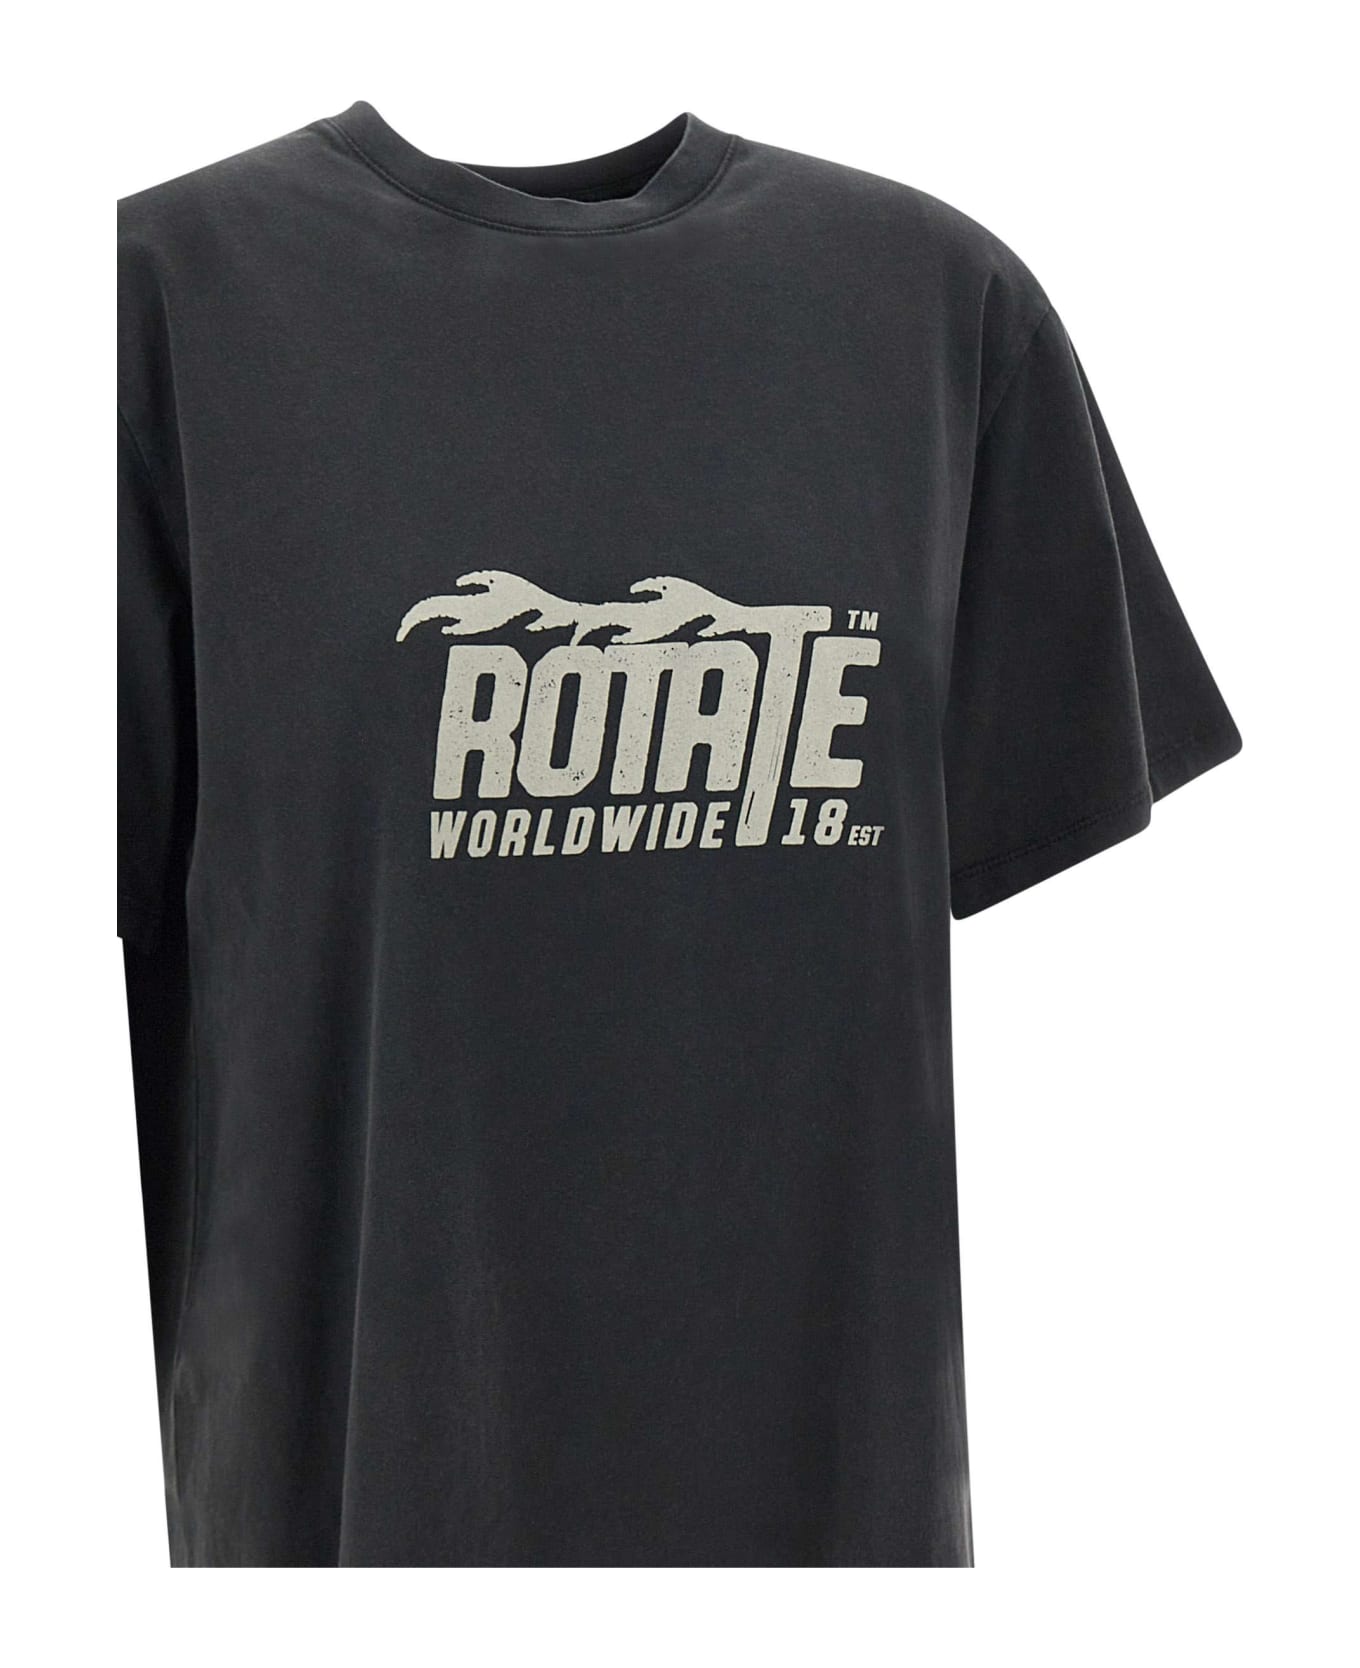 Rotate by Birger Christensen "enzyme" Cotton T-shirt - GREY